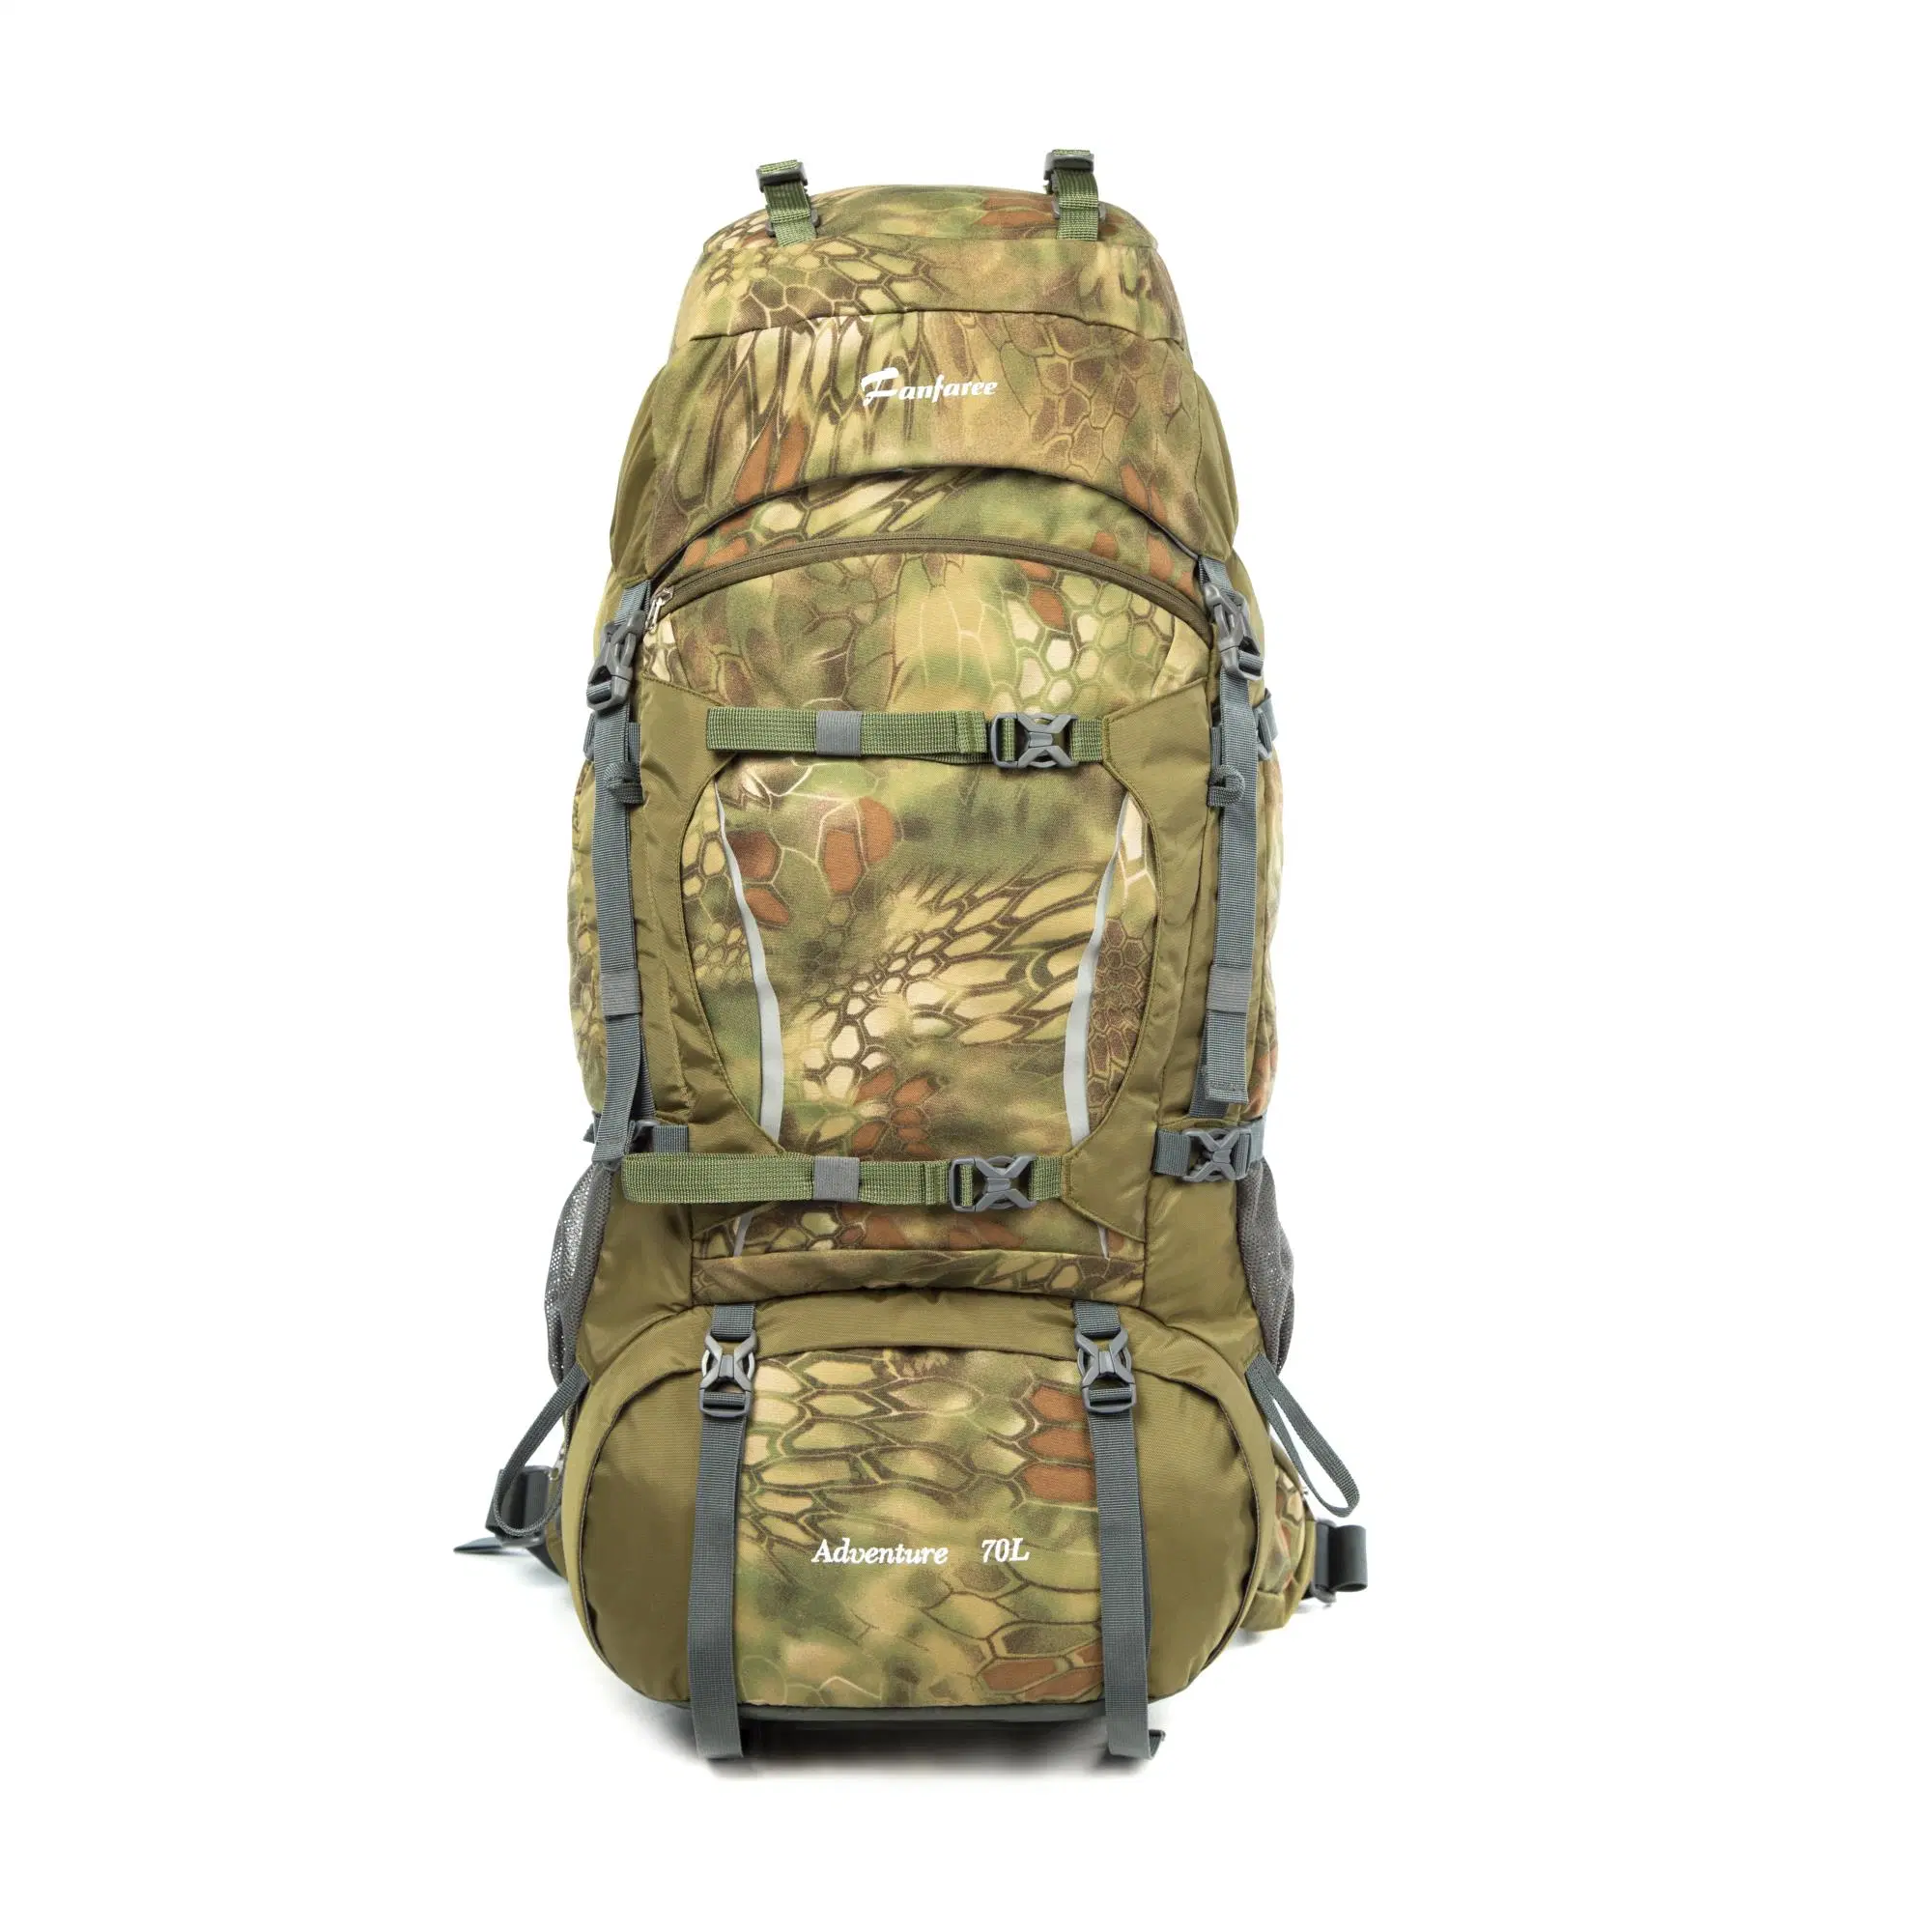 Waterproof Camouflage Nylon Material Mountaineering Bag Outdoor Bag Backpack Hiking Bag 70L